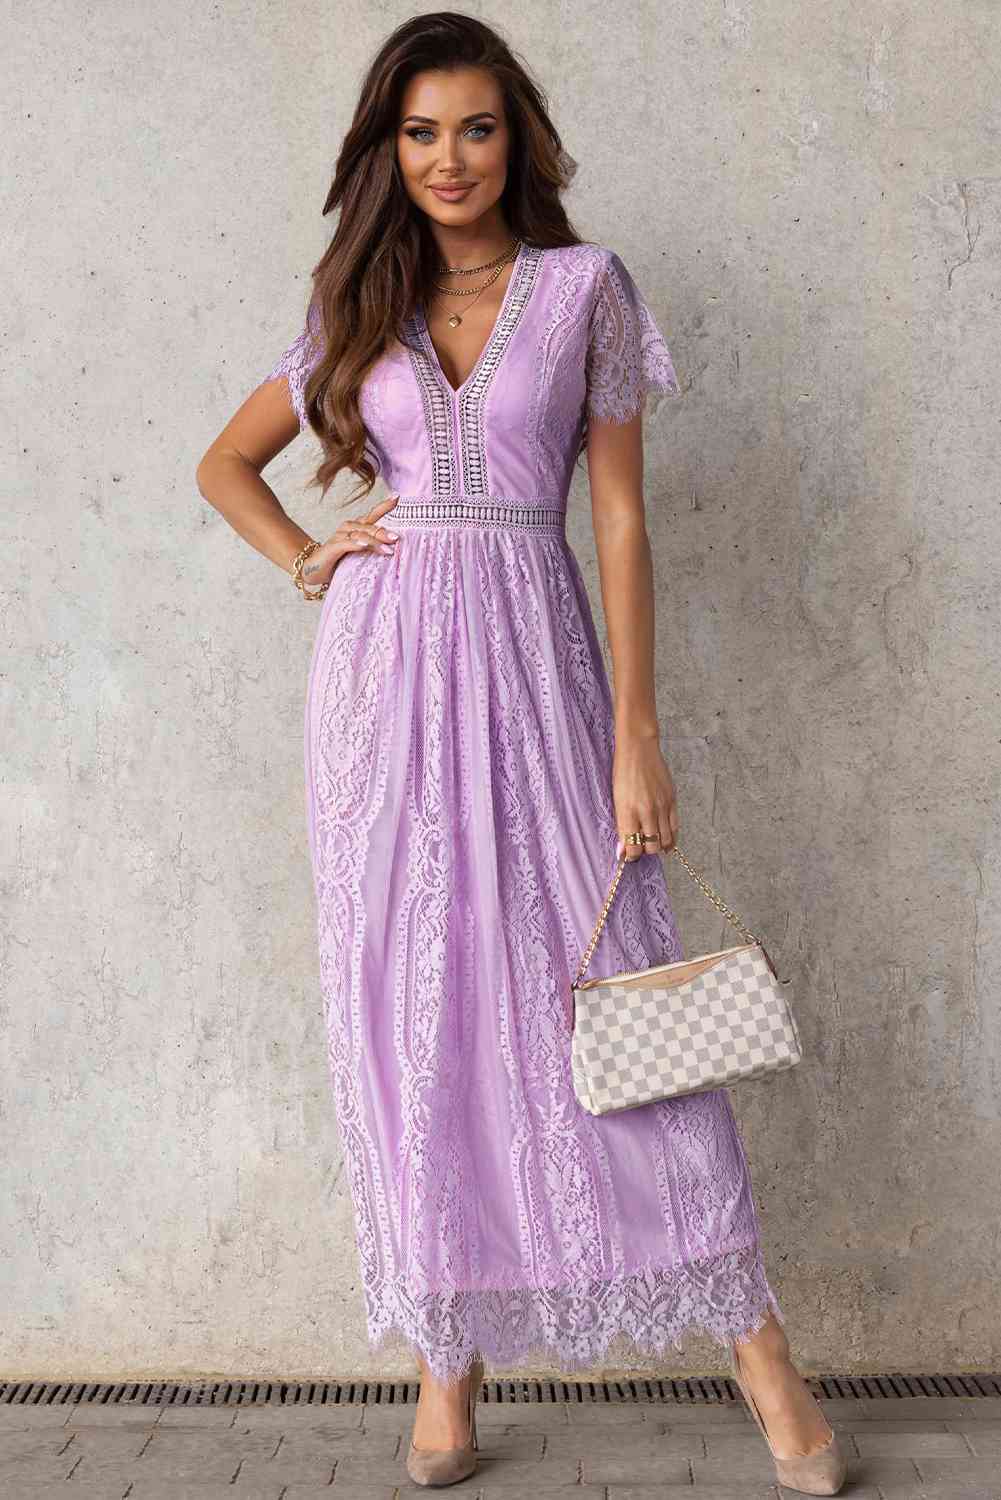 Scalloped Trim Lace Plunge Dress - Lavender / S - All Dresses - Dresses - 14 - 2024